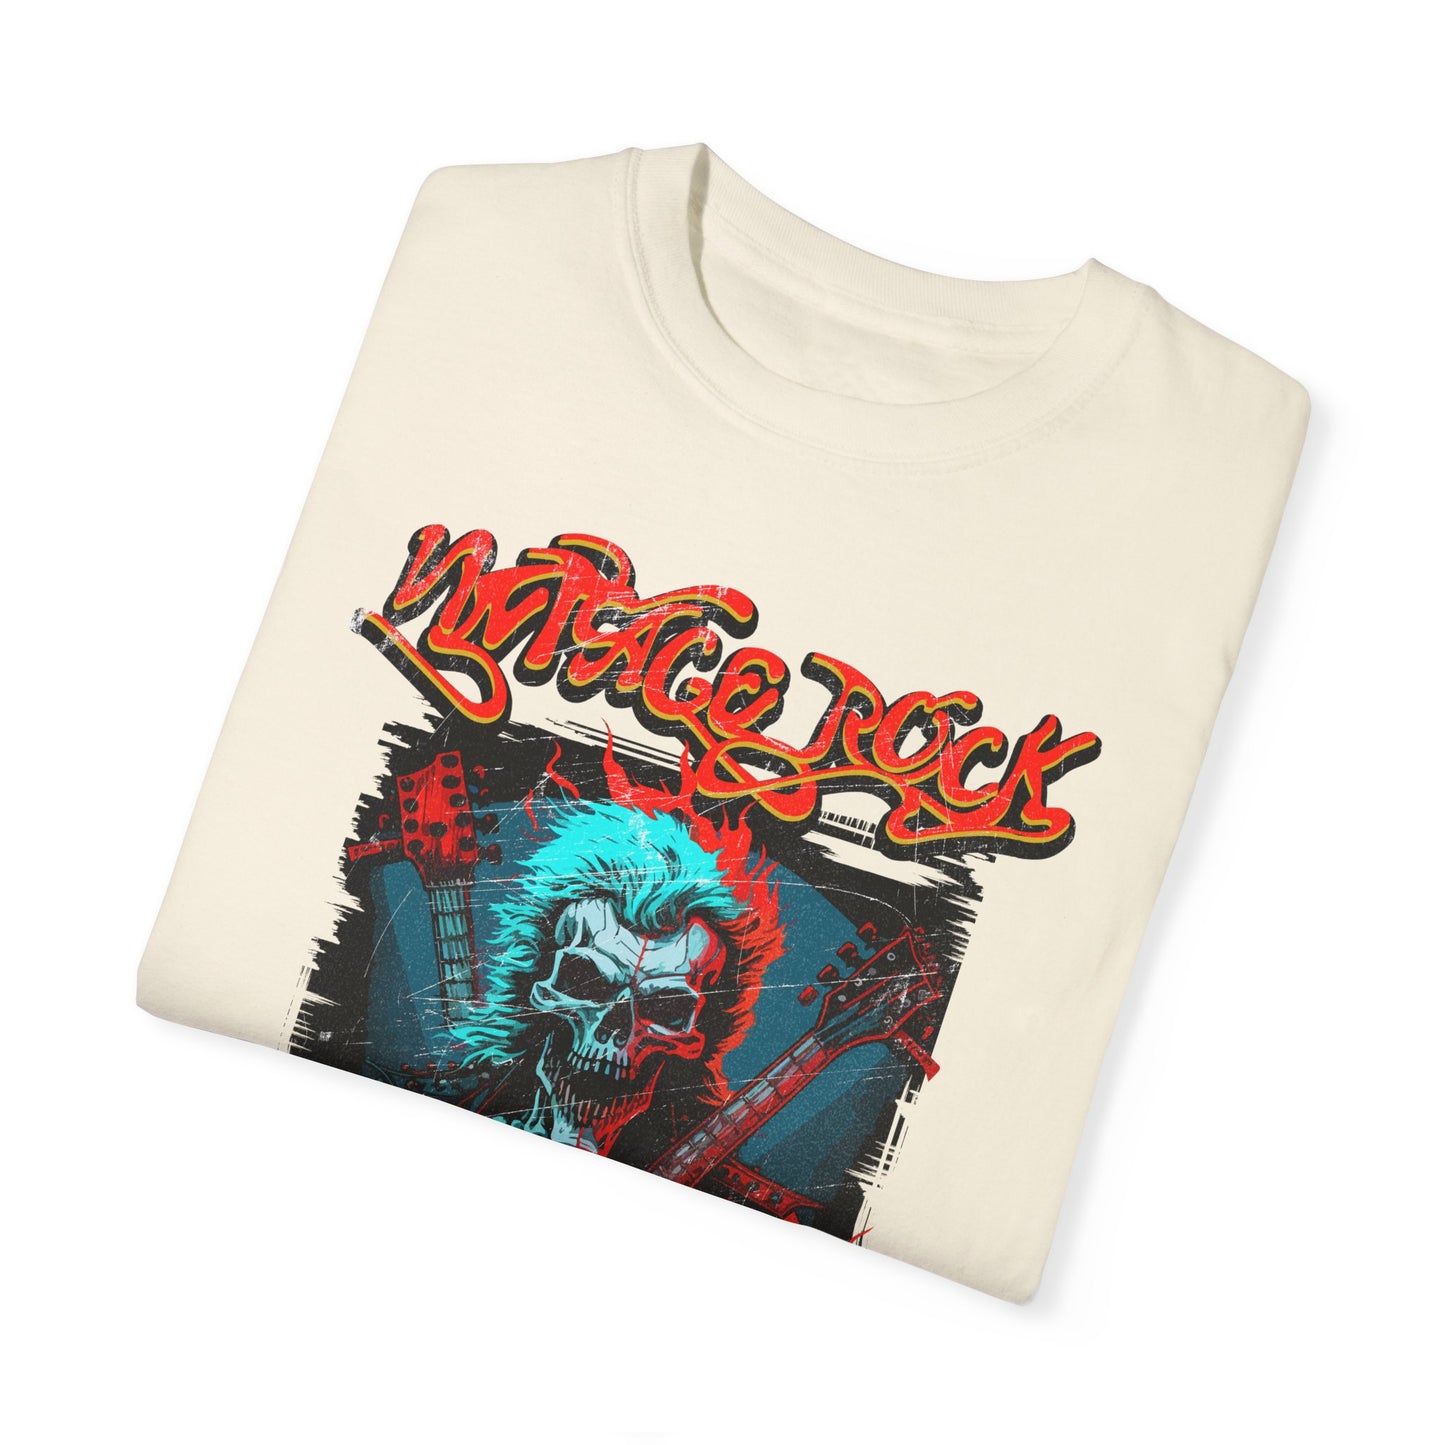 Vintage Rock Unisex Garment-Dyed T-shirt